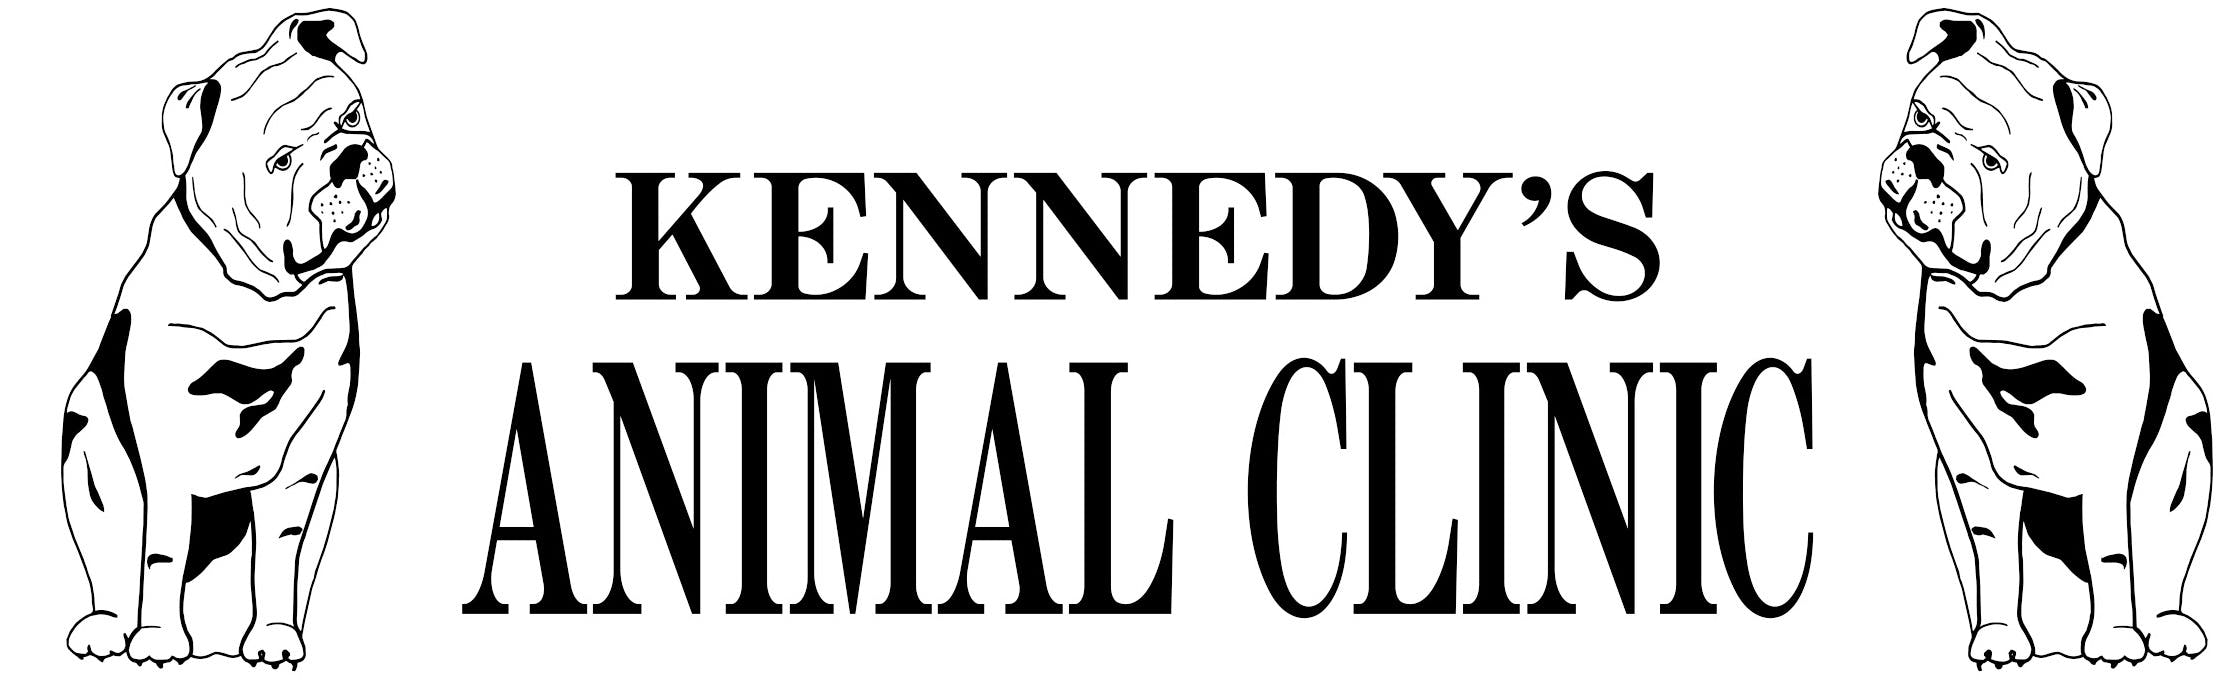 Kennedy's Animal Clinic Logo